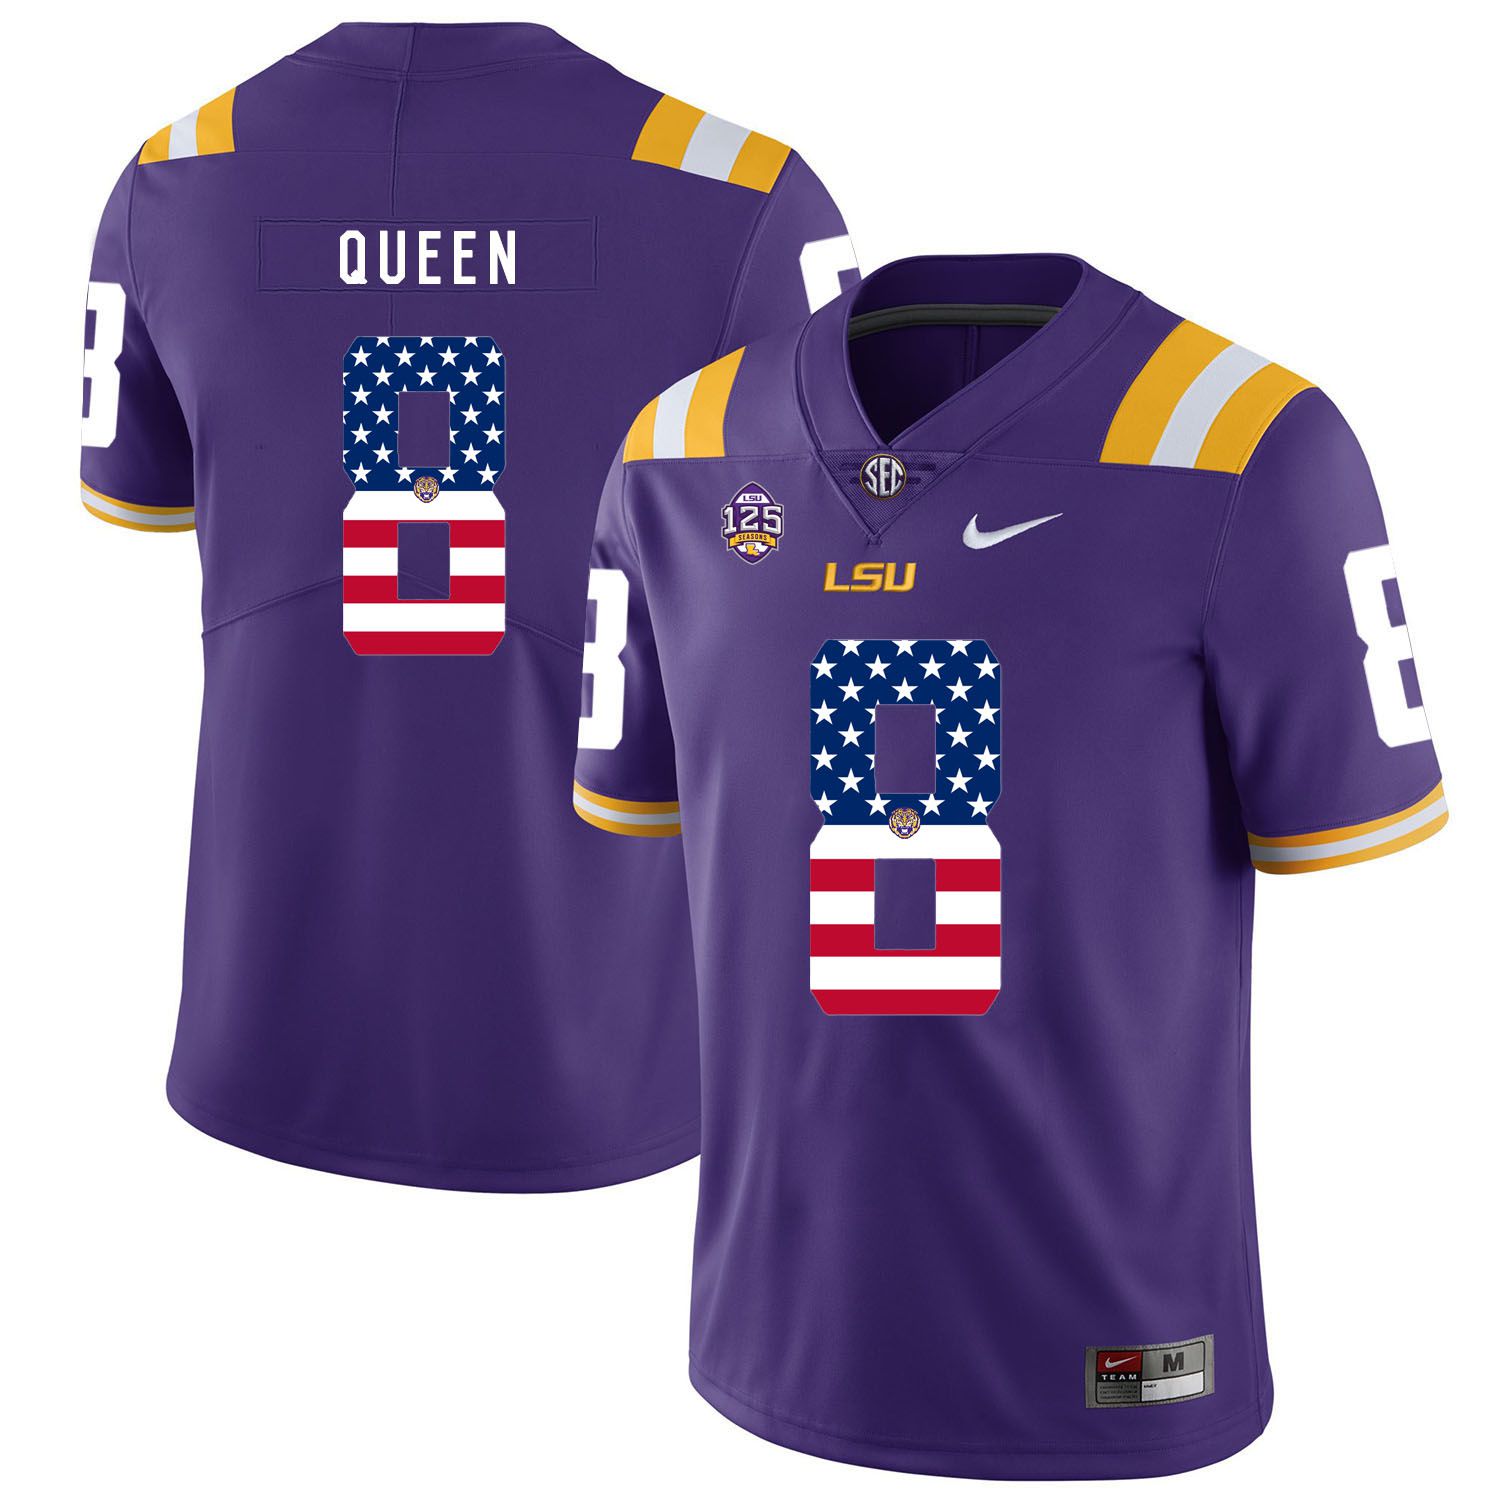 Men LSU Tigers #8 Queen Purple Flag Customized NCAA Jerseys